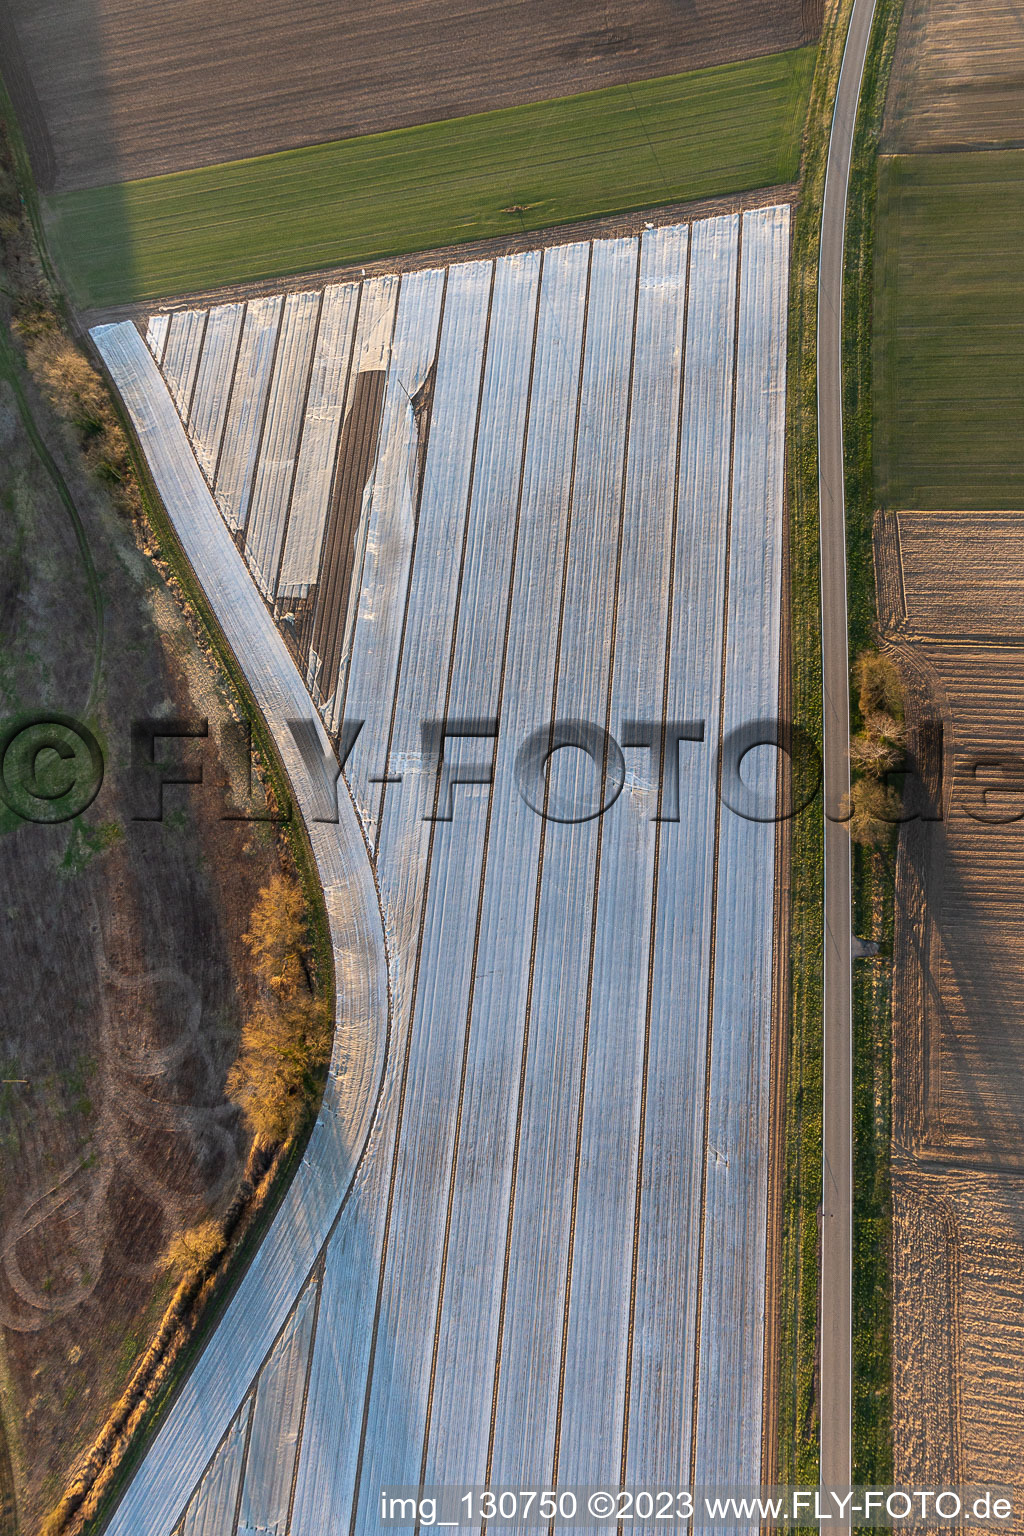 Asparagus field at Hayna in the district Hayna in Herxheim bei Landau/Pfalz in the state Rhineland-Palatinate, Germany